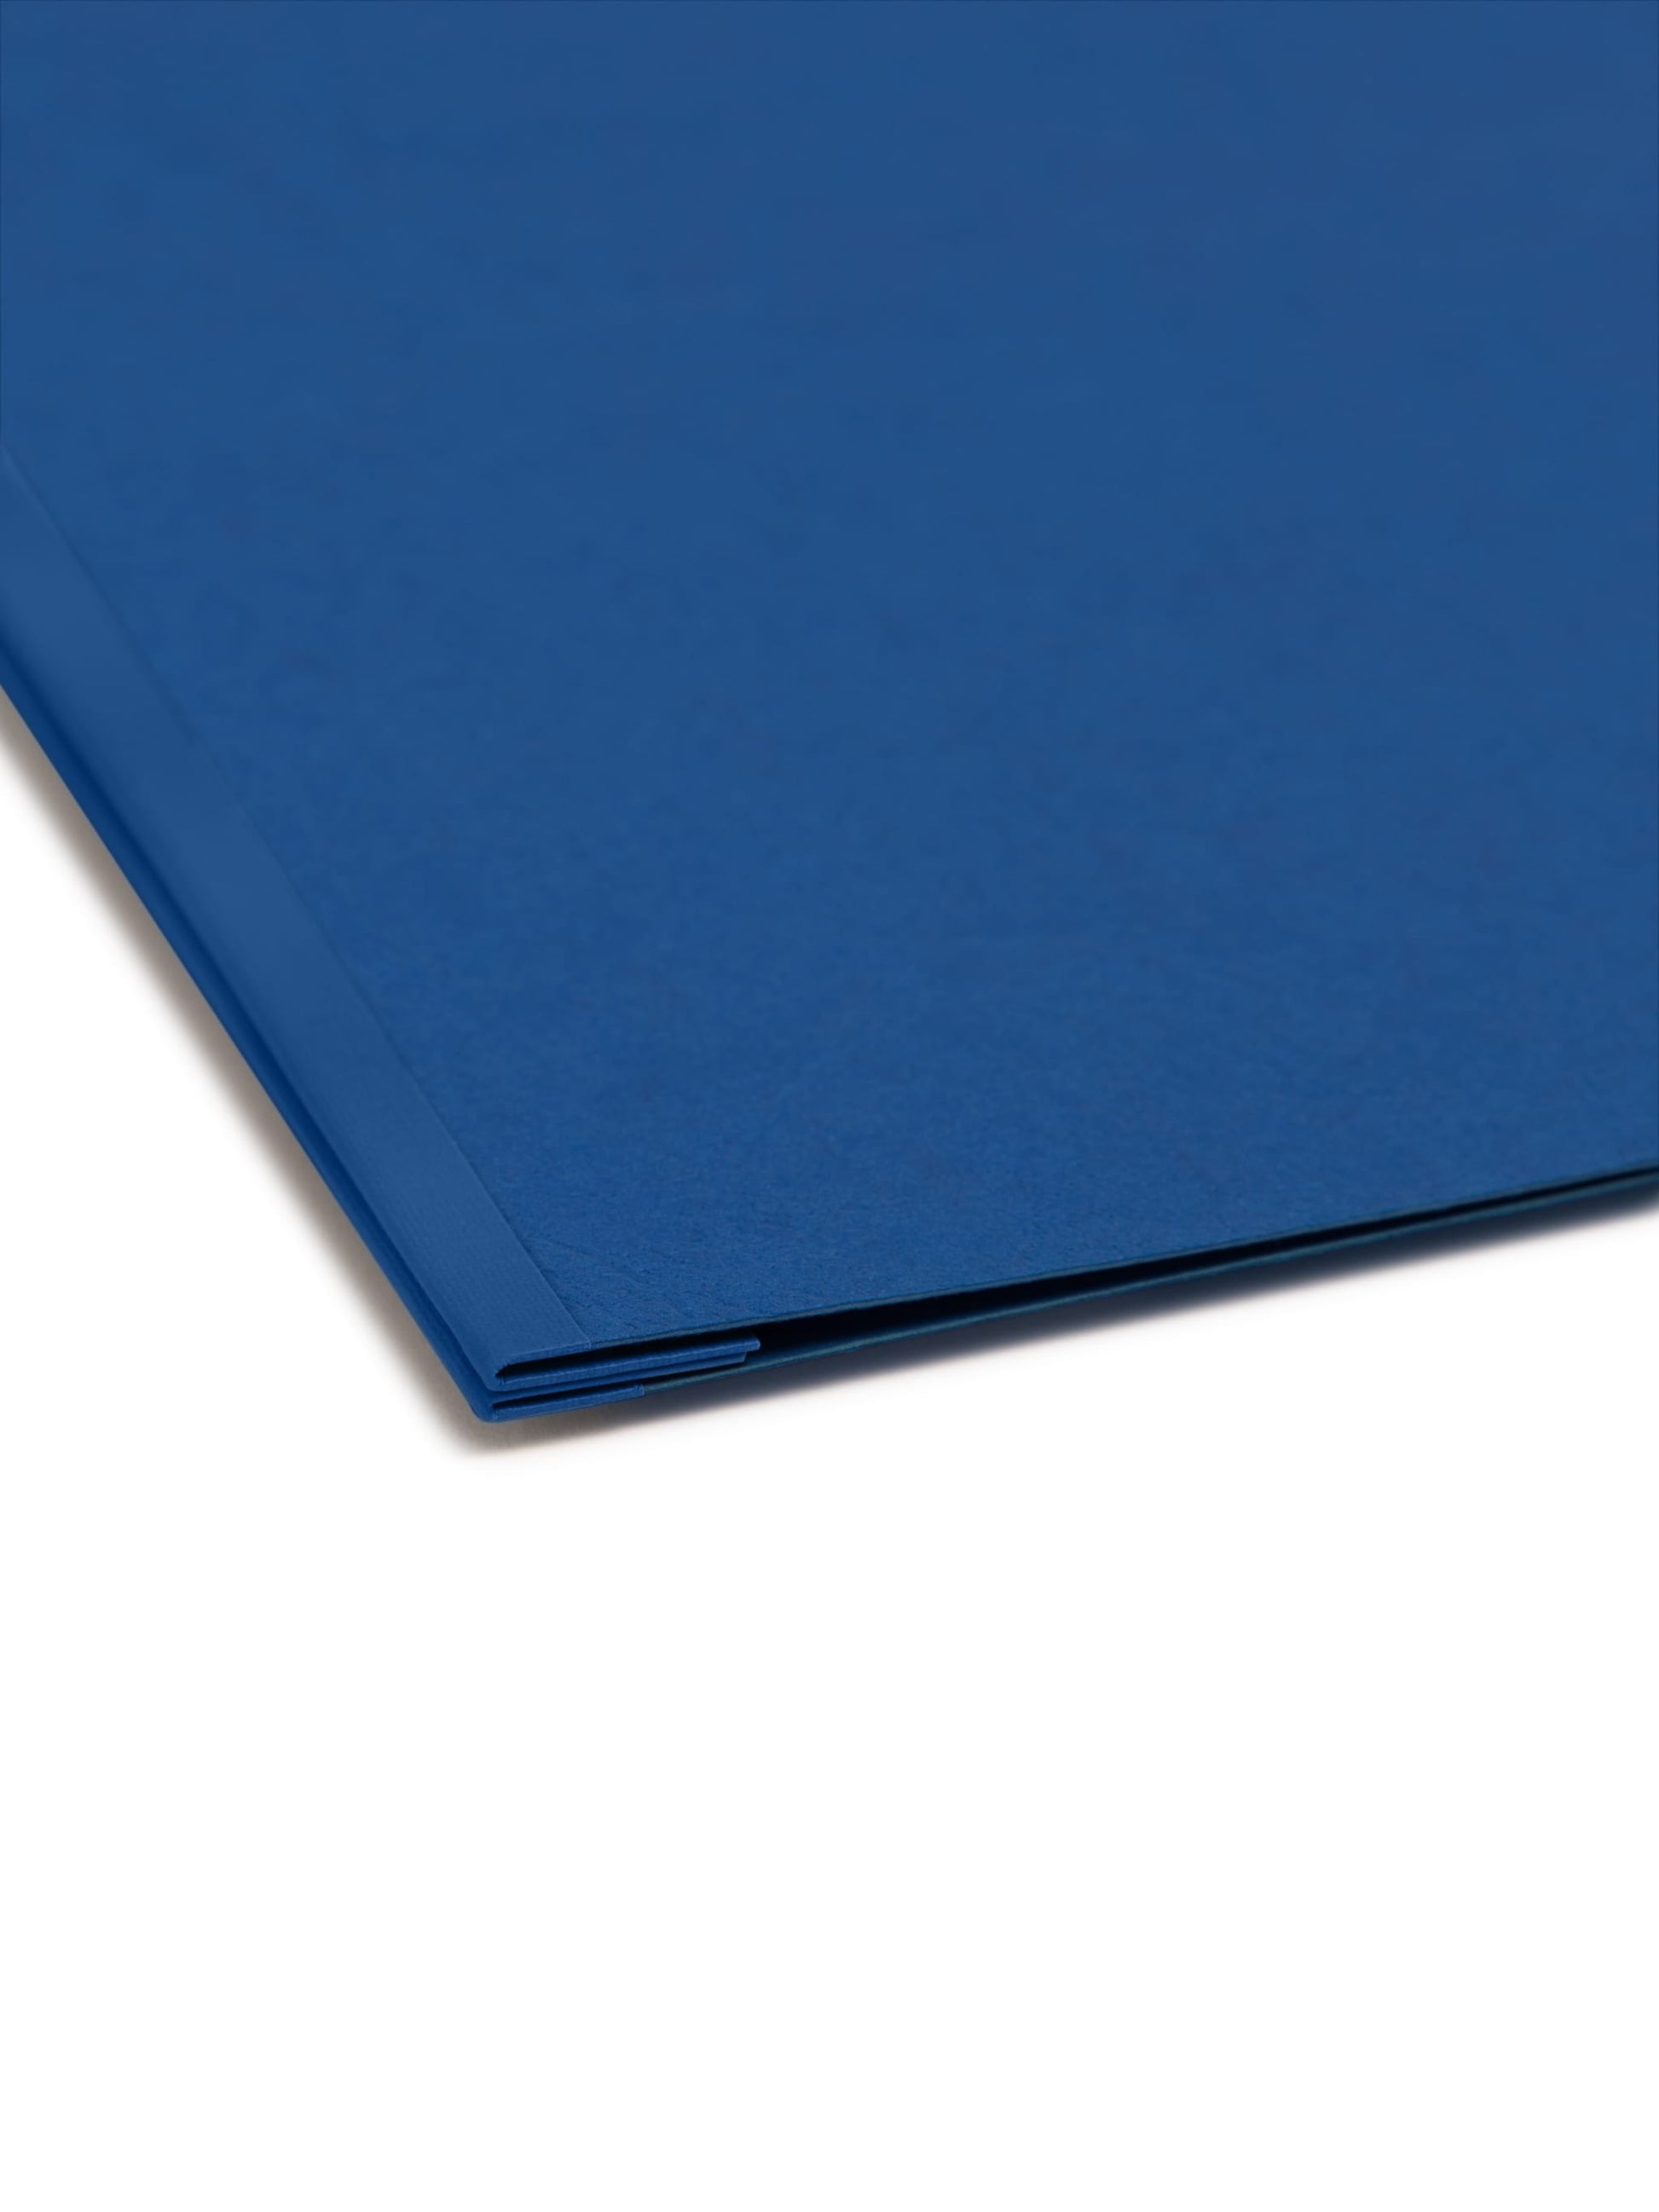 Premium Pressboard Report Covers, Metal Prong with Compressor, Side Fastener, 3 inch Expansion, 1 Fastener, Dark Blue Color, Letter Size, Set of 0, 30086486813540